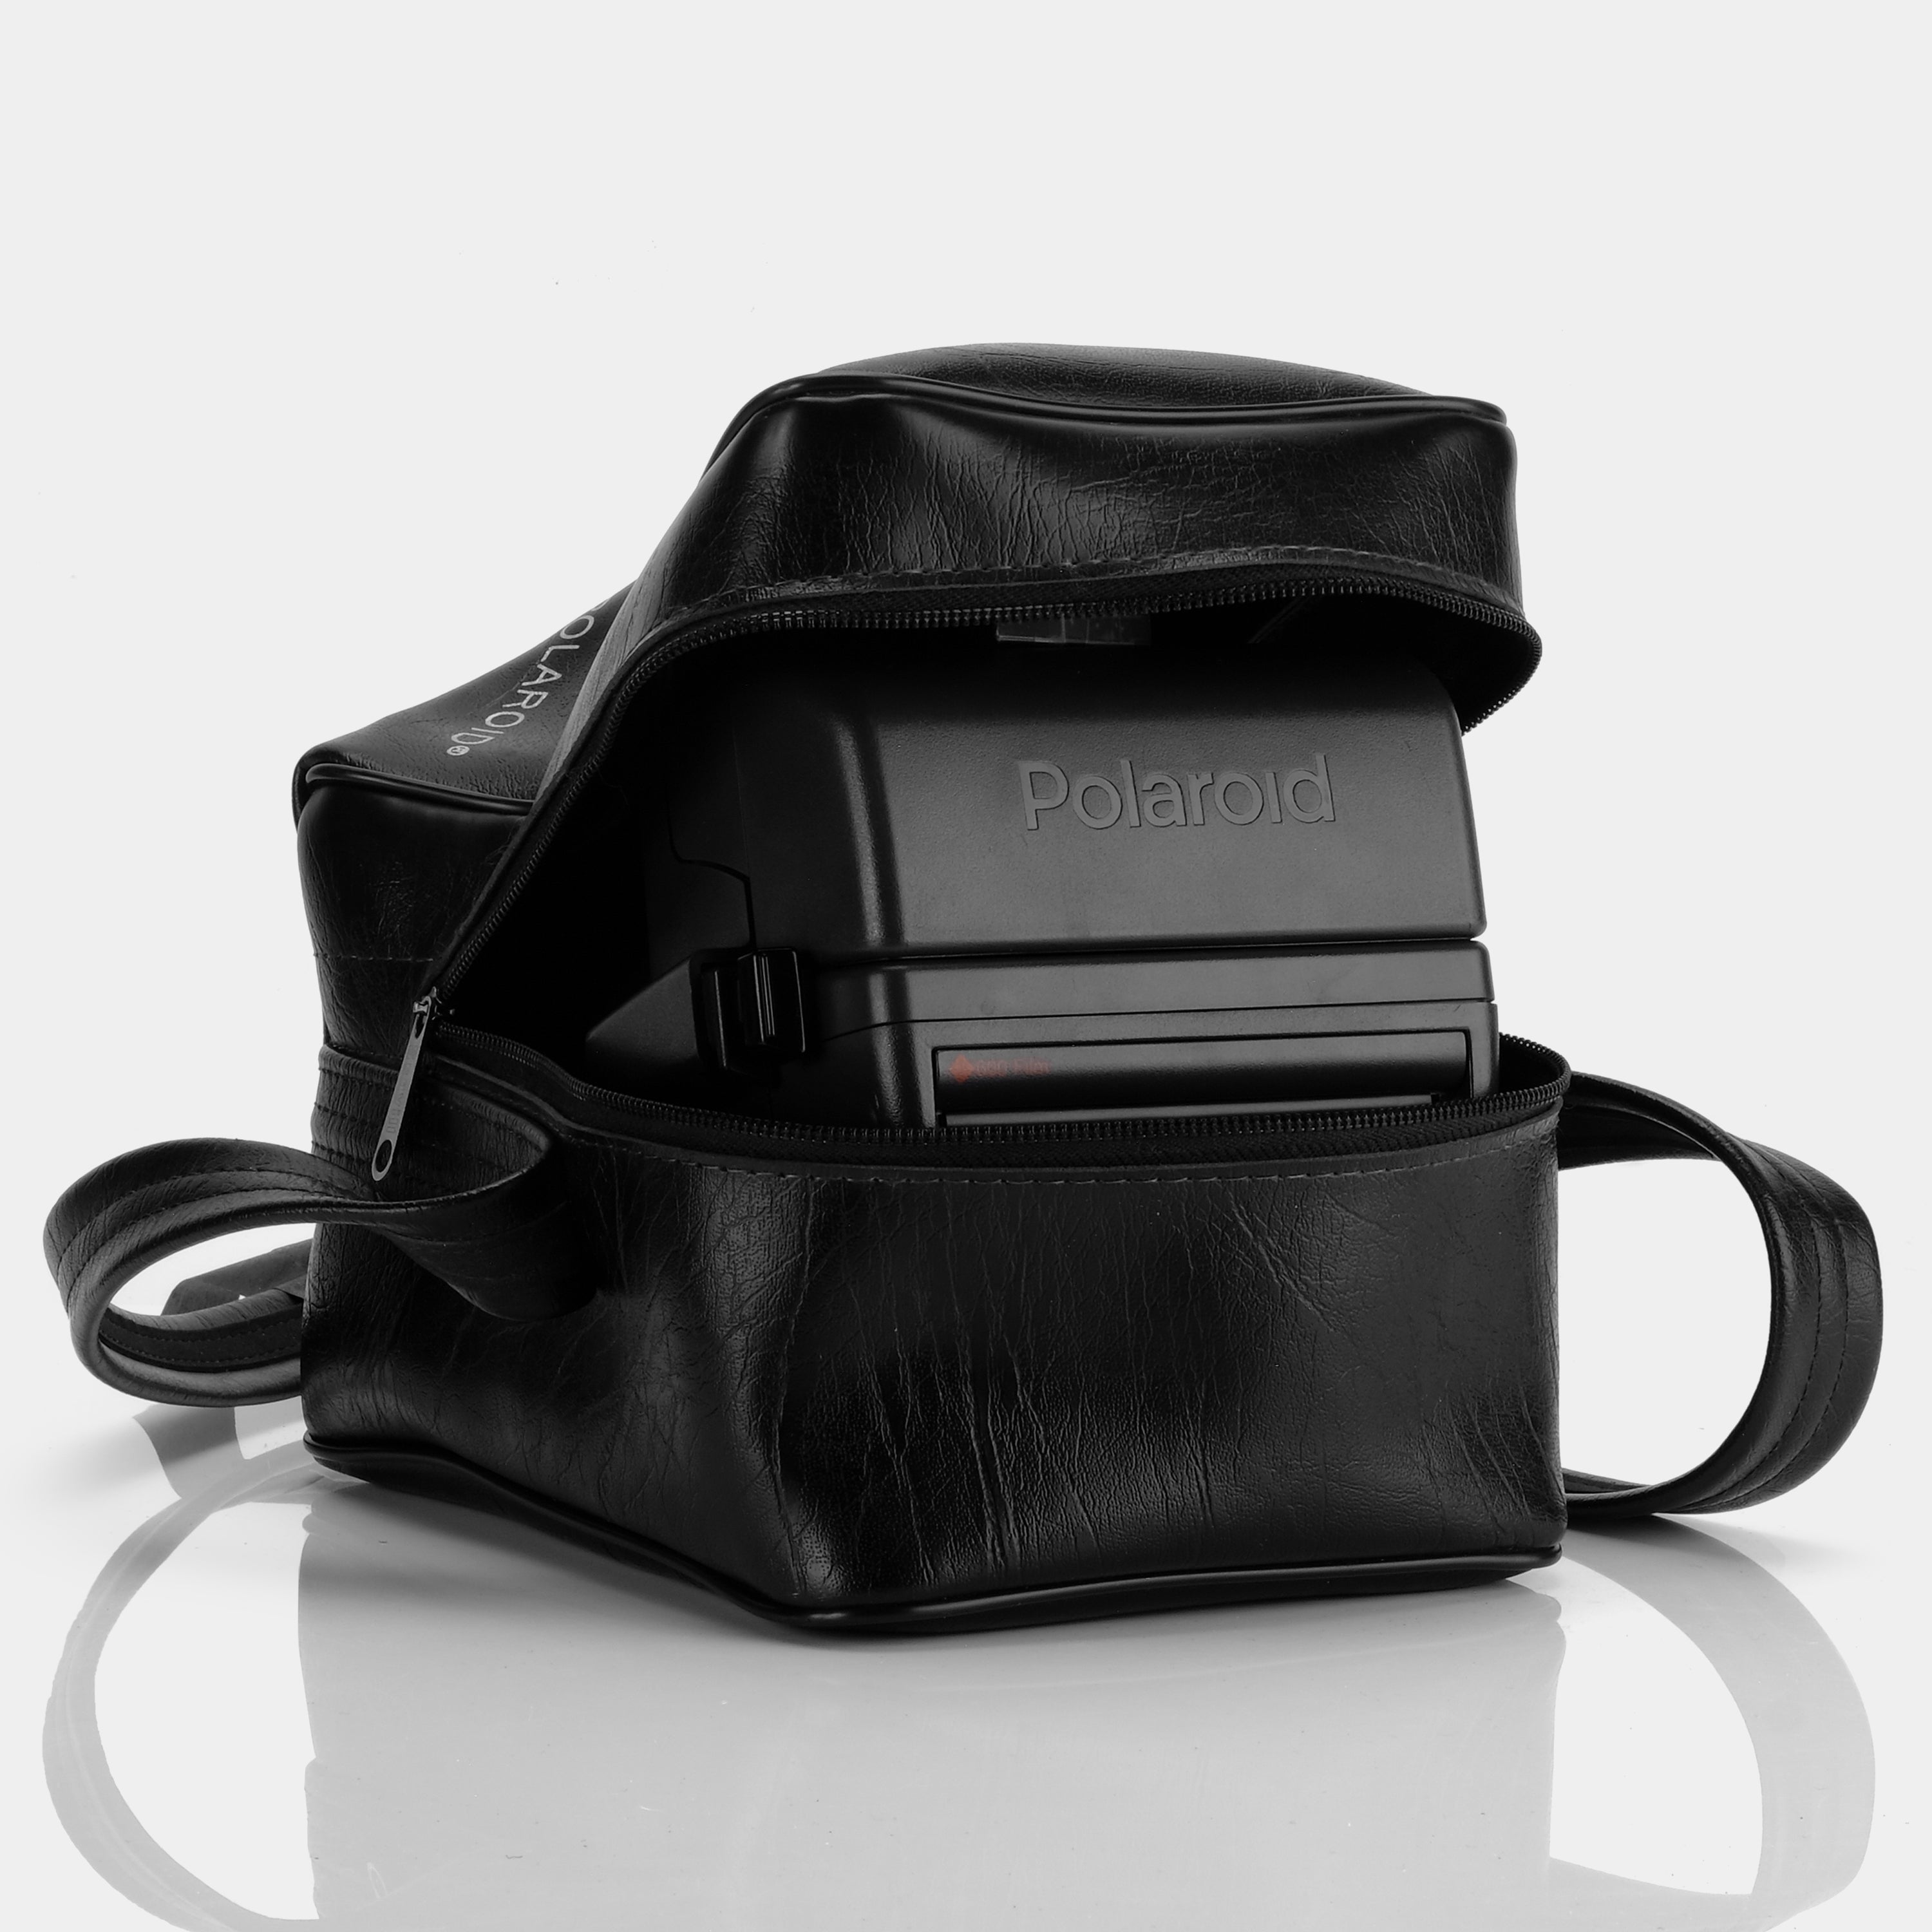 Black Polaroid Instant Camera Bag